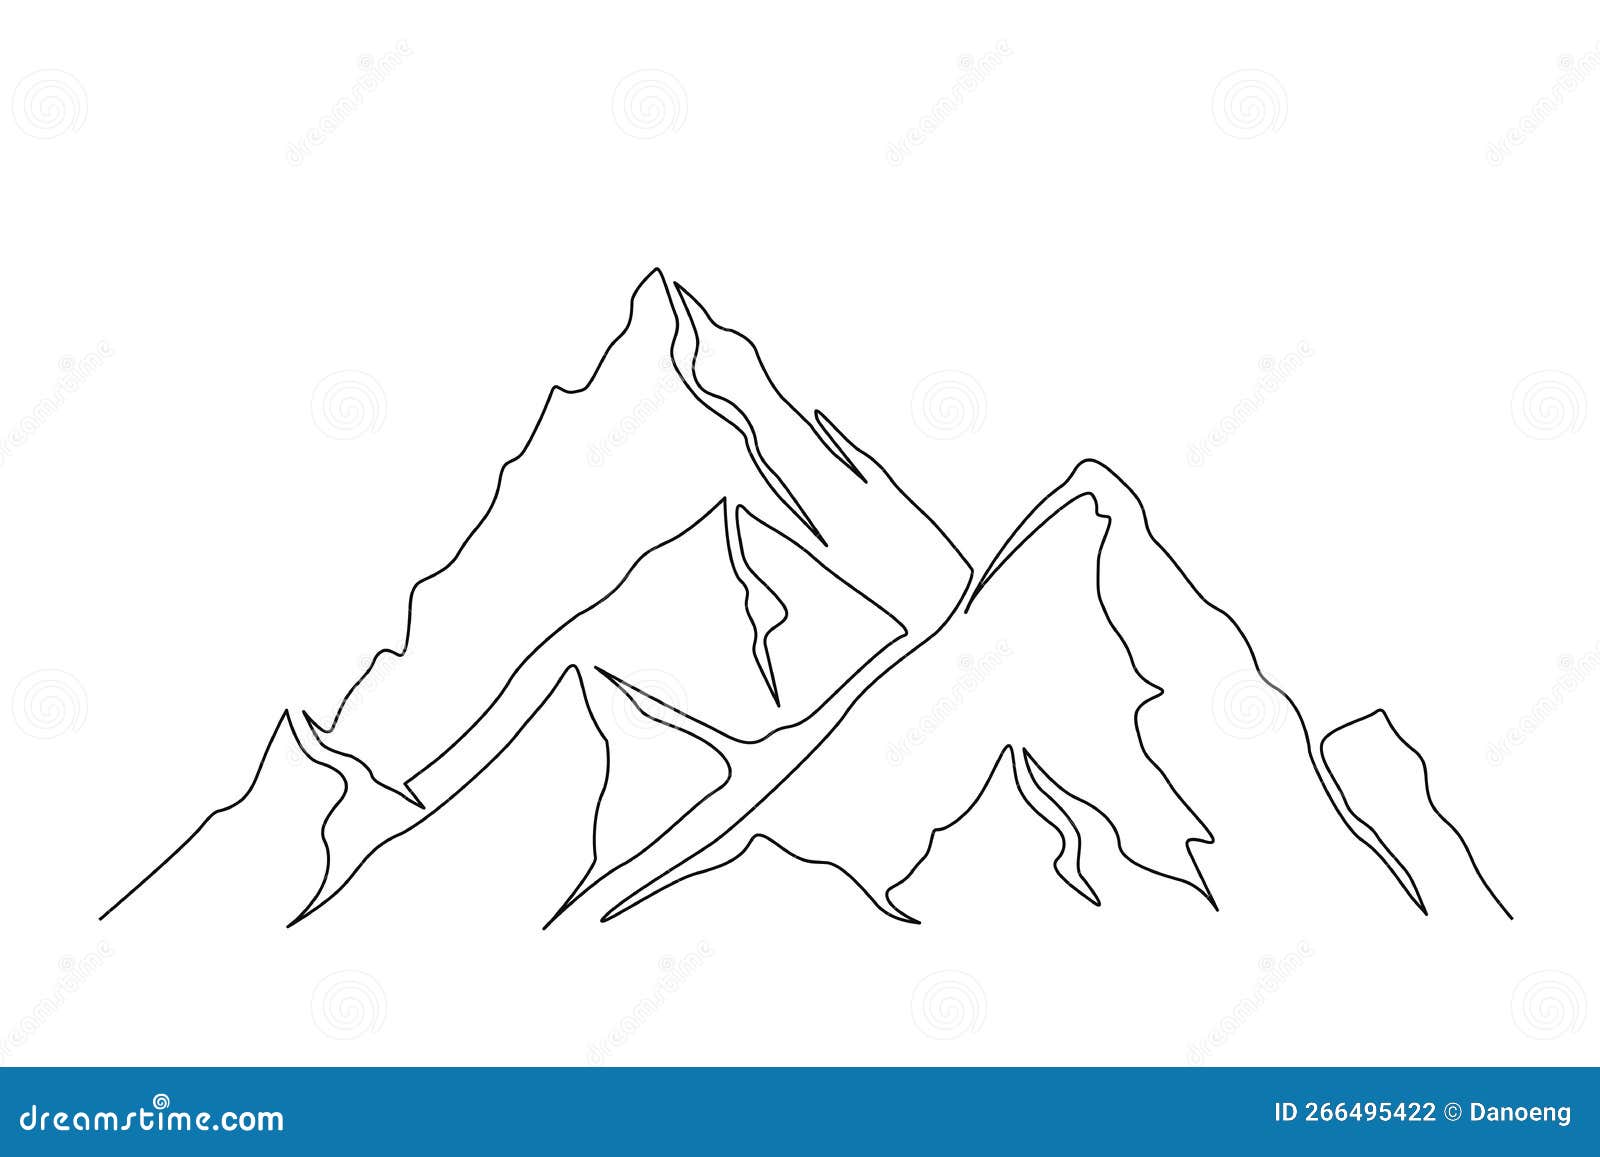 continuous one line drawing mountain landscape simple range design high mounts peak lineart vector adventure winter sports 266495422